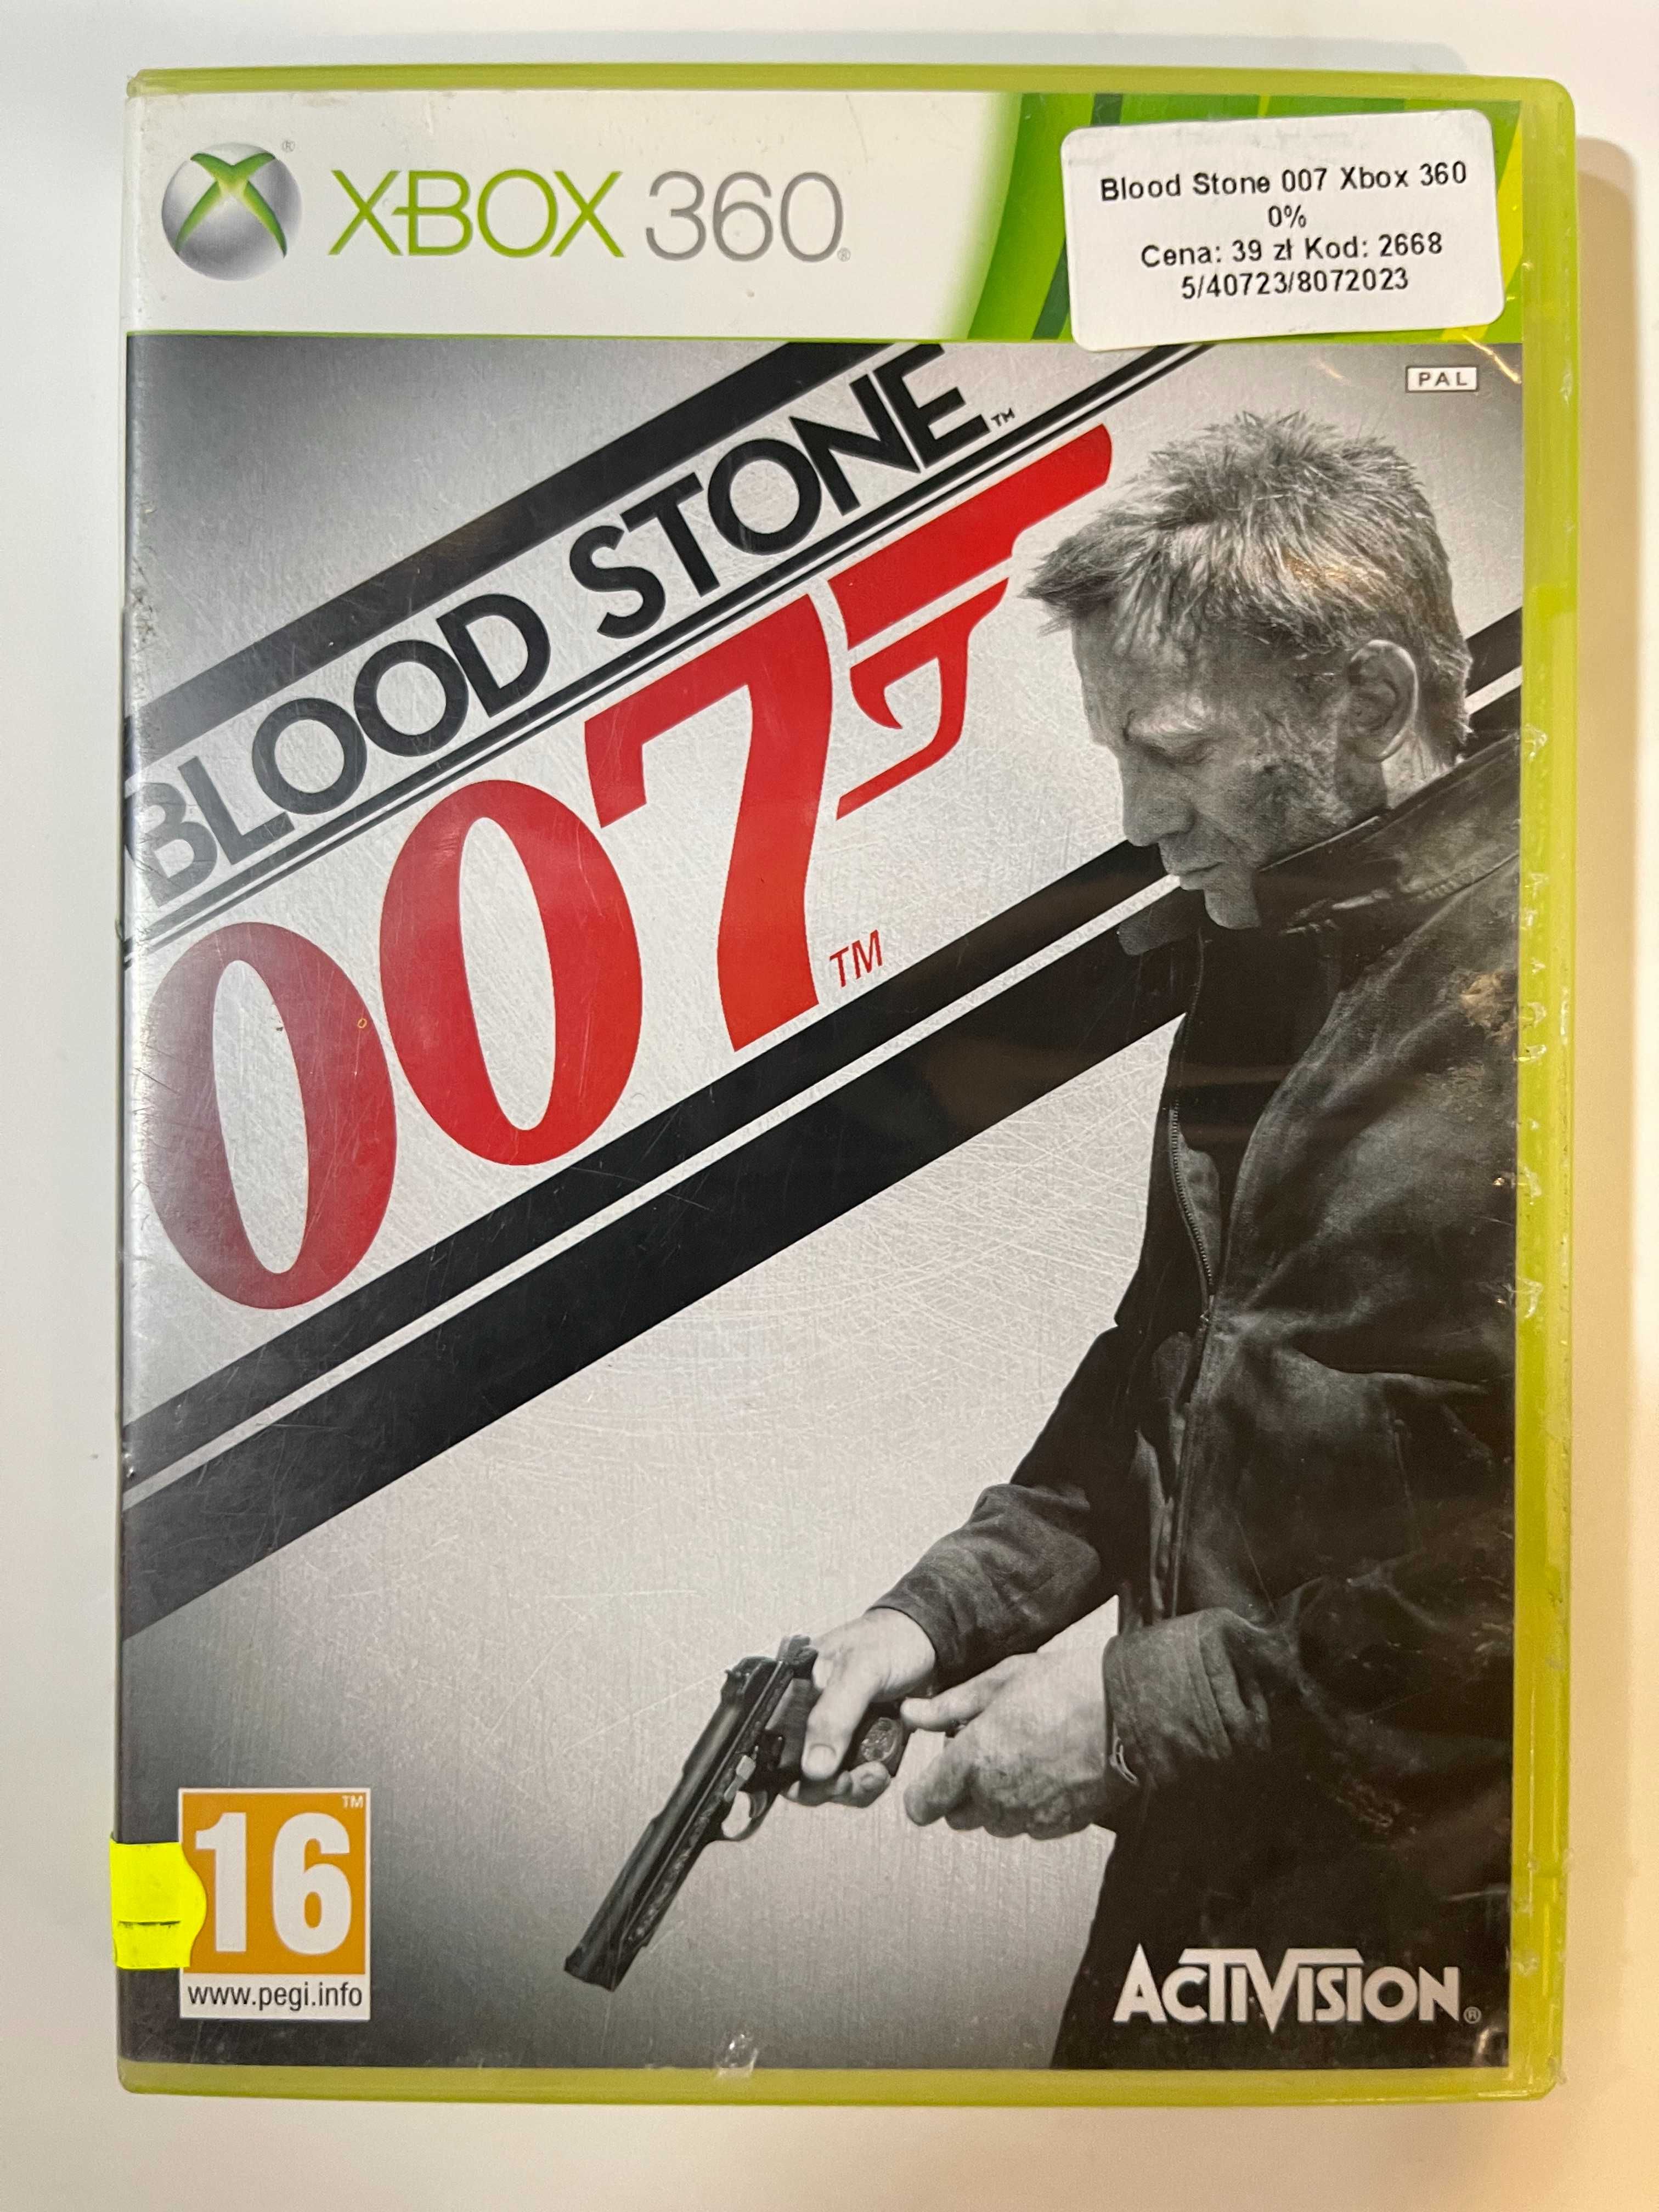 Blood Stone 007 Xbox 360